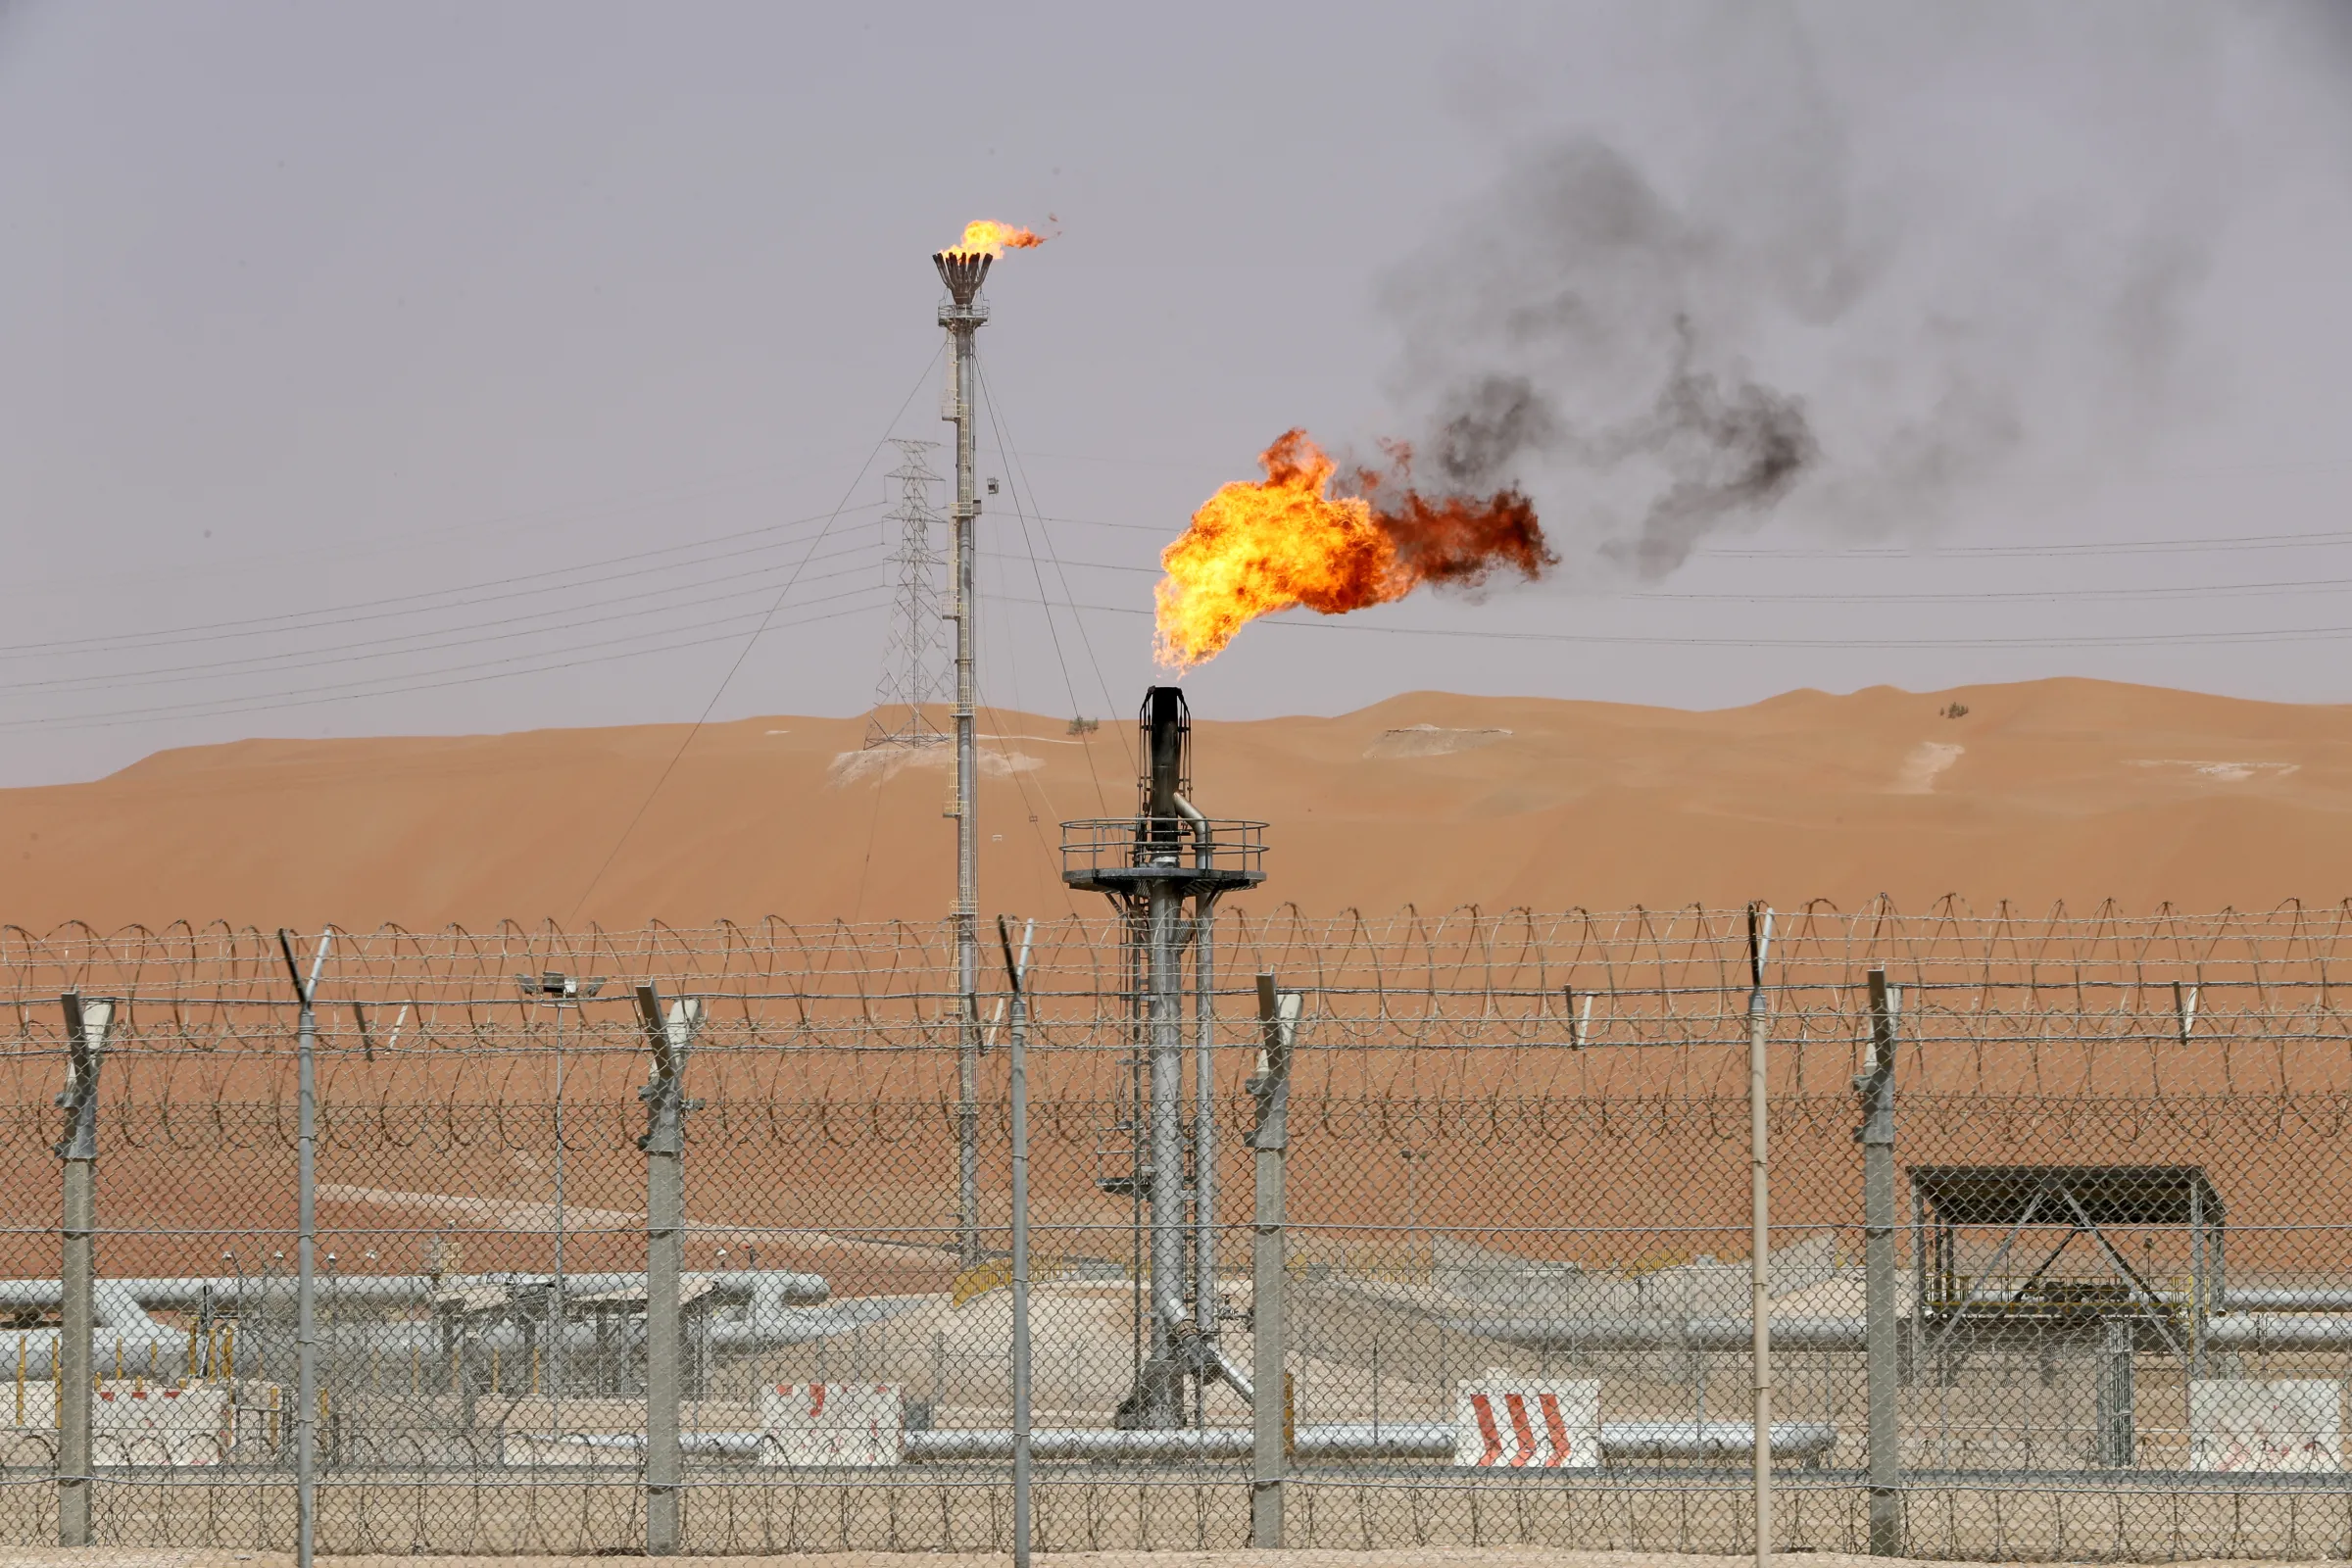 Flames are seen at the production facility of Saudi Aramco's Shaybah oilfield in the Empty Quarter, Saudi Arabia May 22, 2018. REUTERS/Ahmed Jadallah